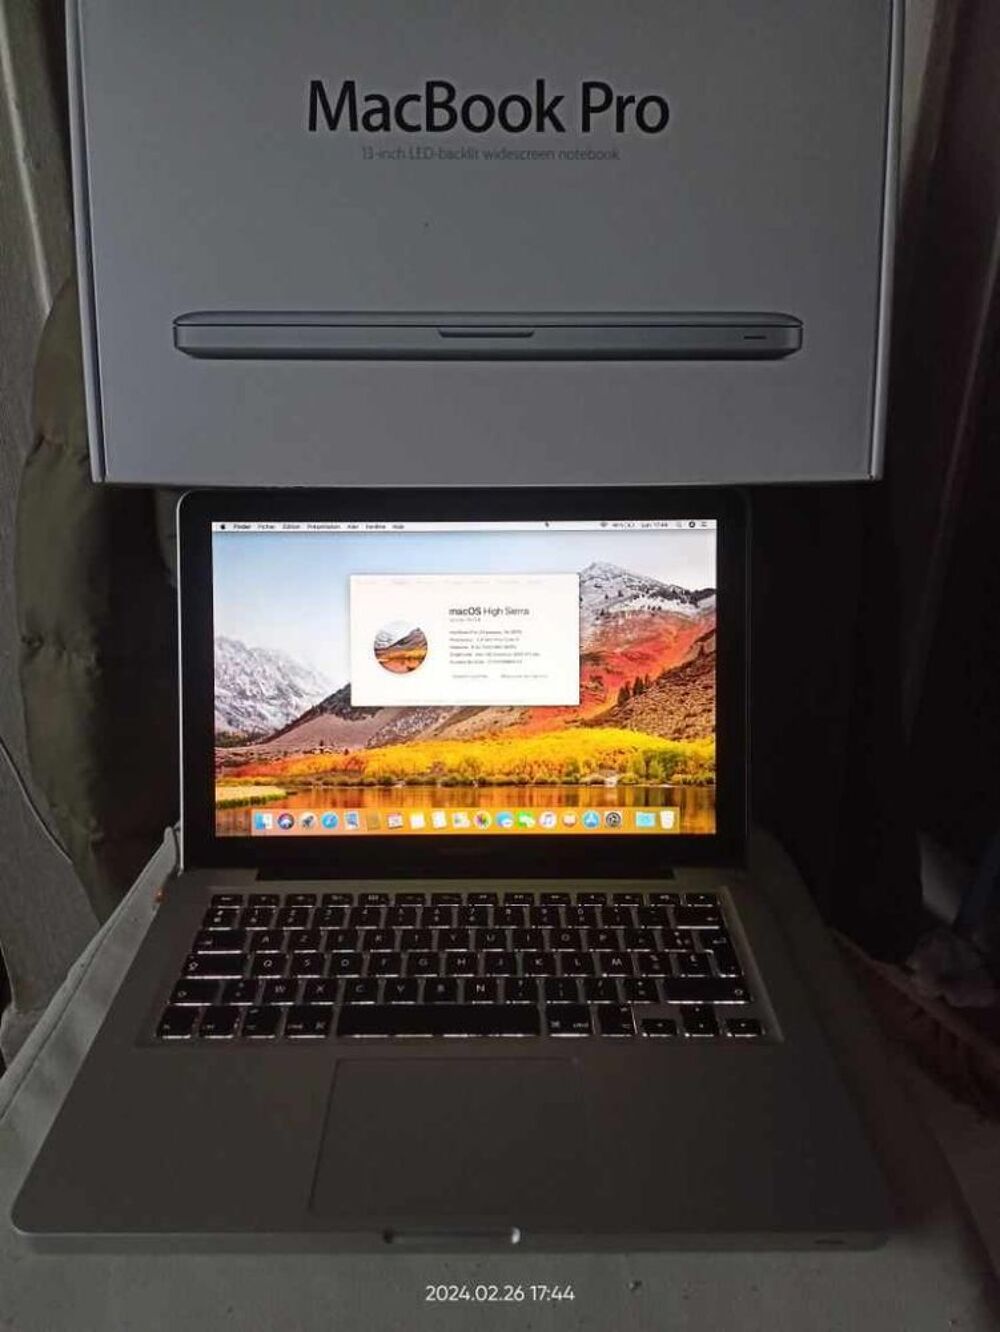 MacBook Pro Matriel informatique